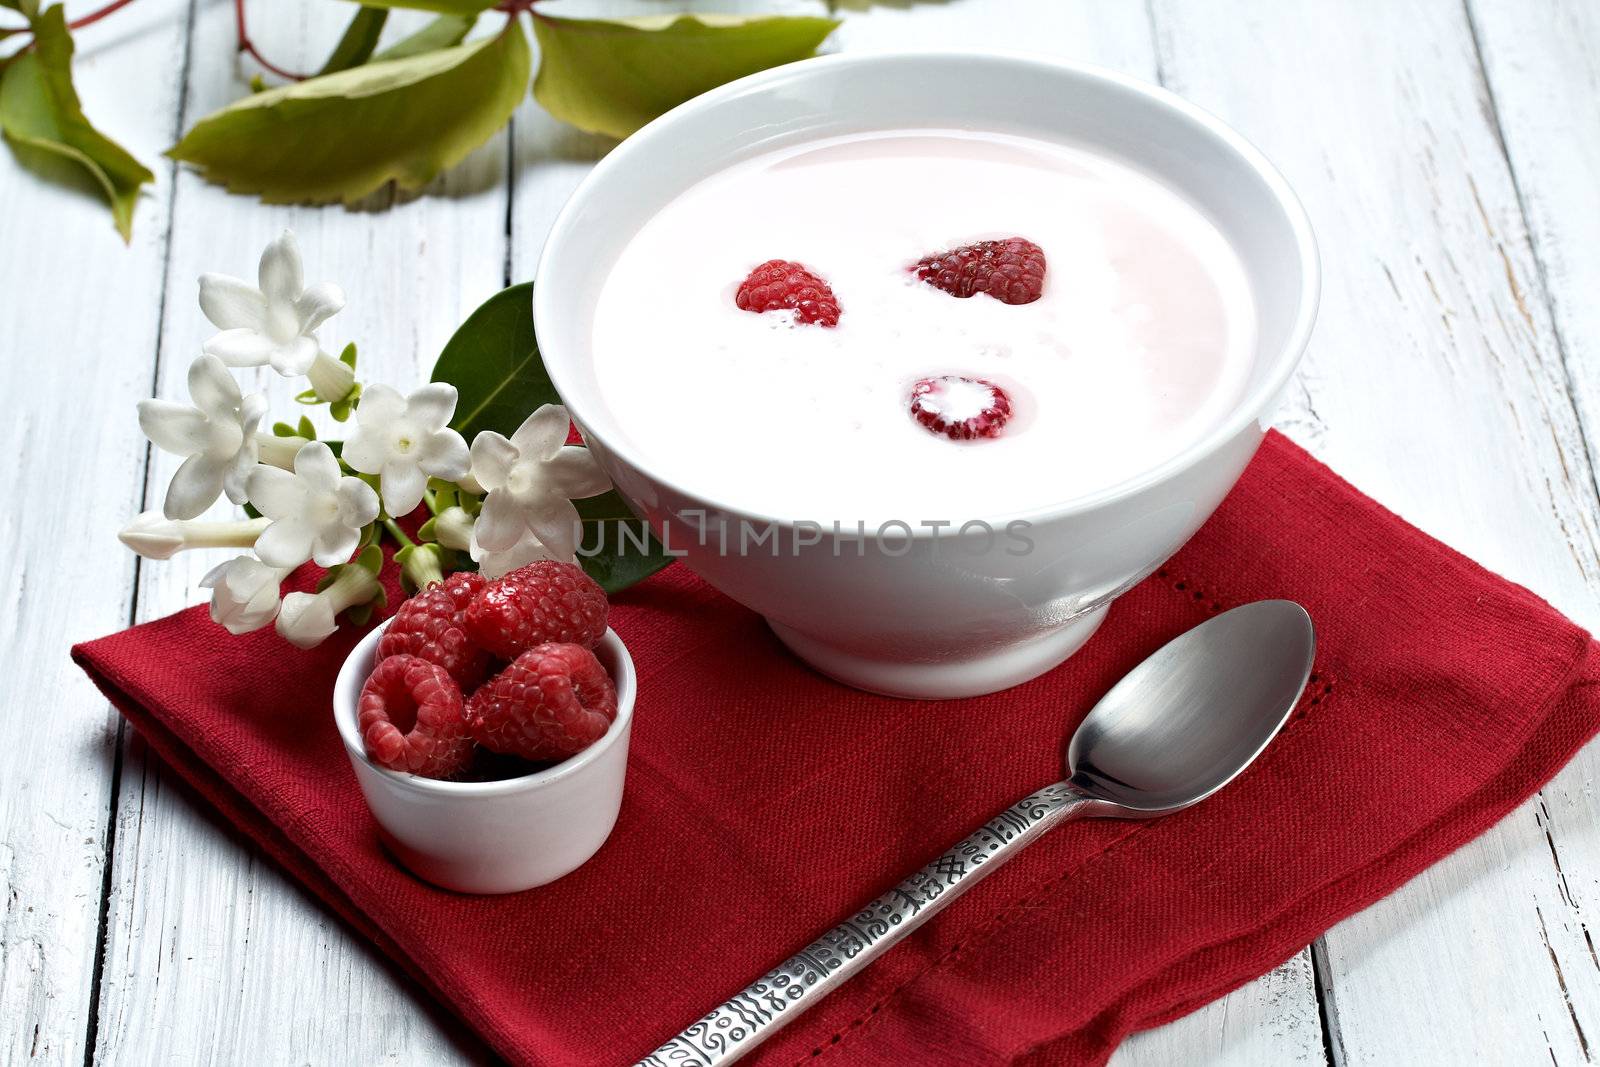 raspberry with yogurt by maxg71